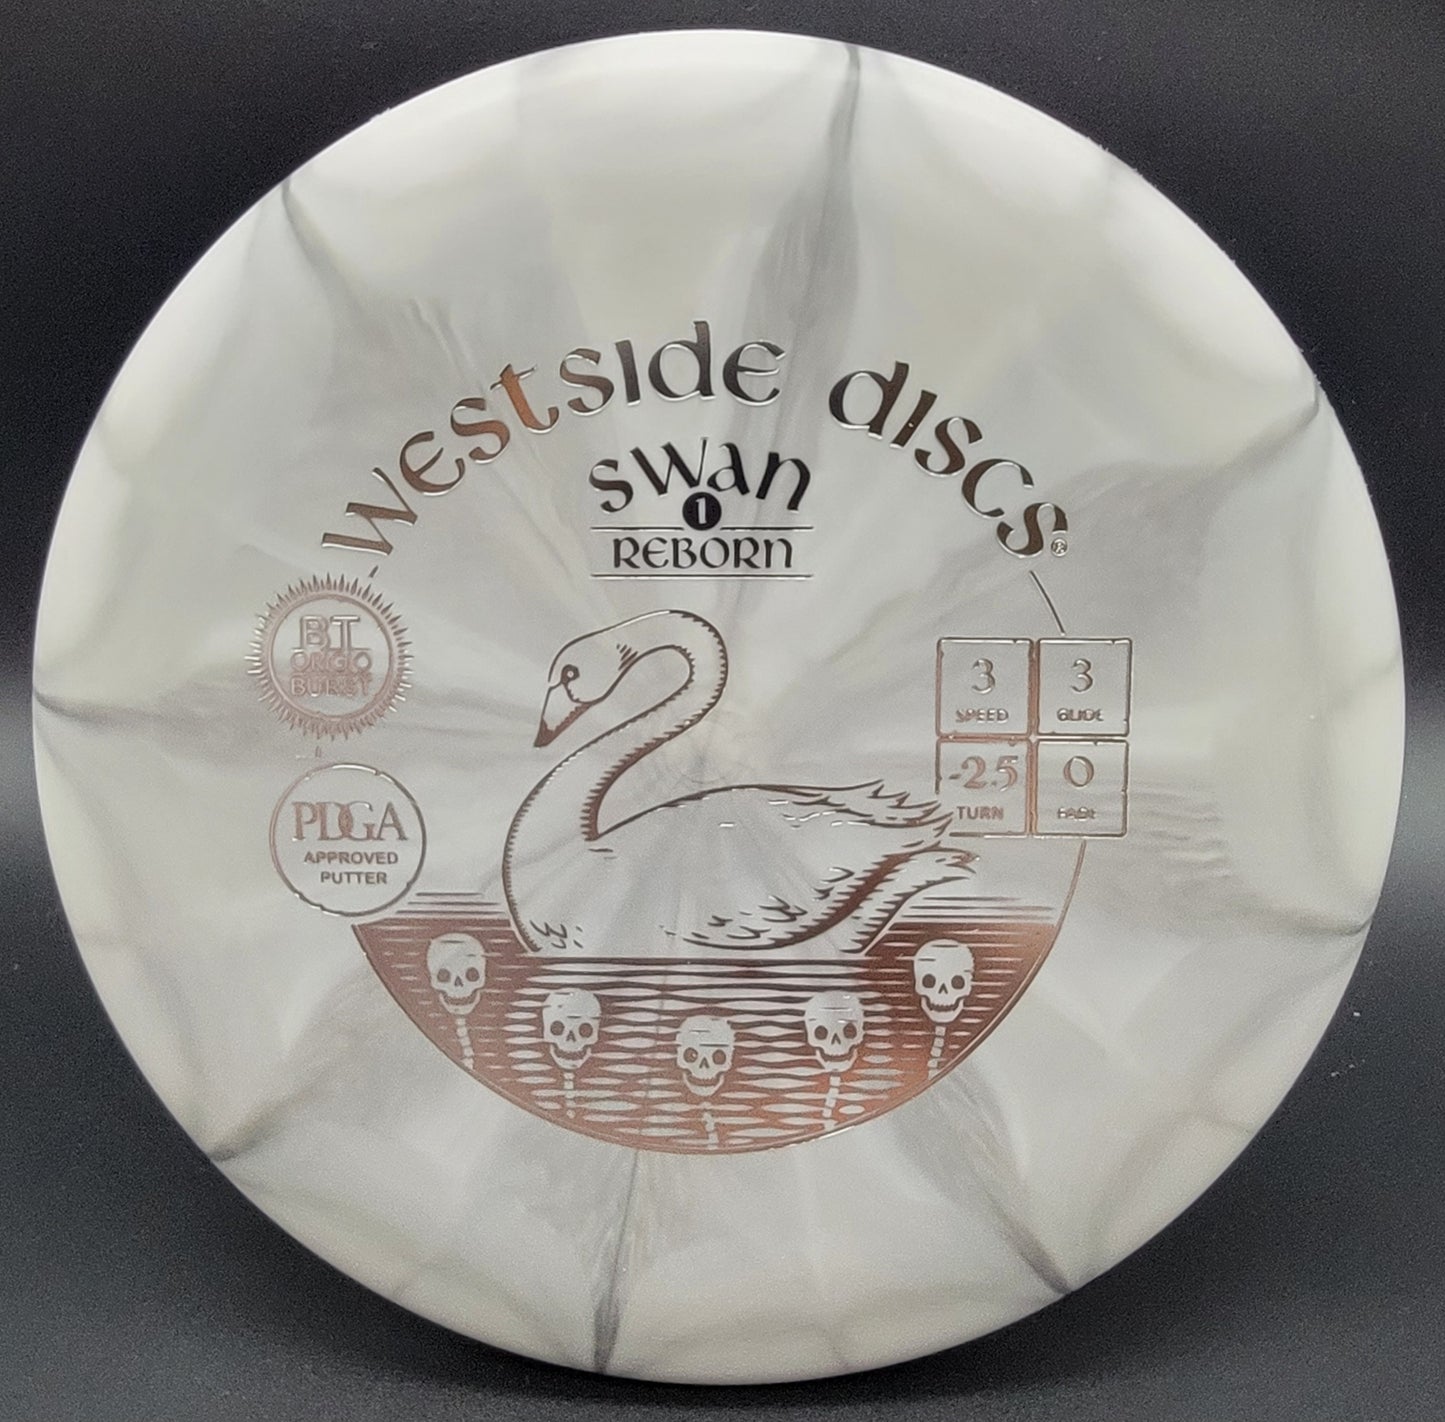 Westside Discs Burst Swan 1 Reborn